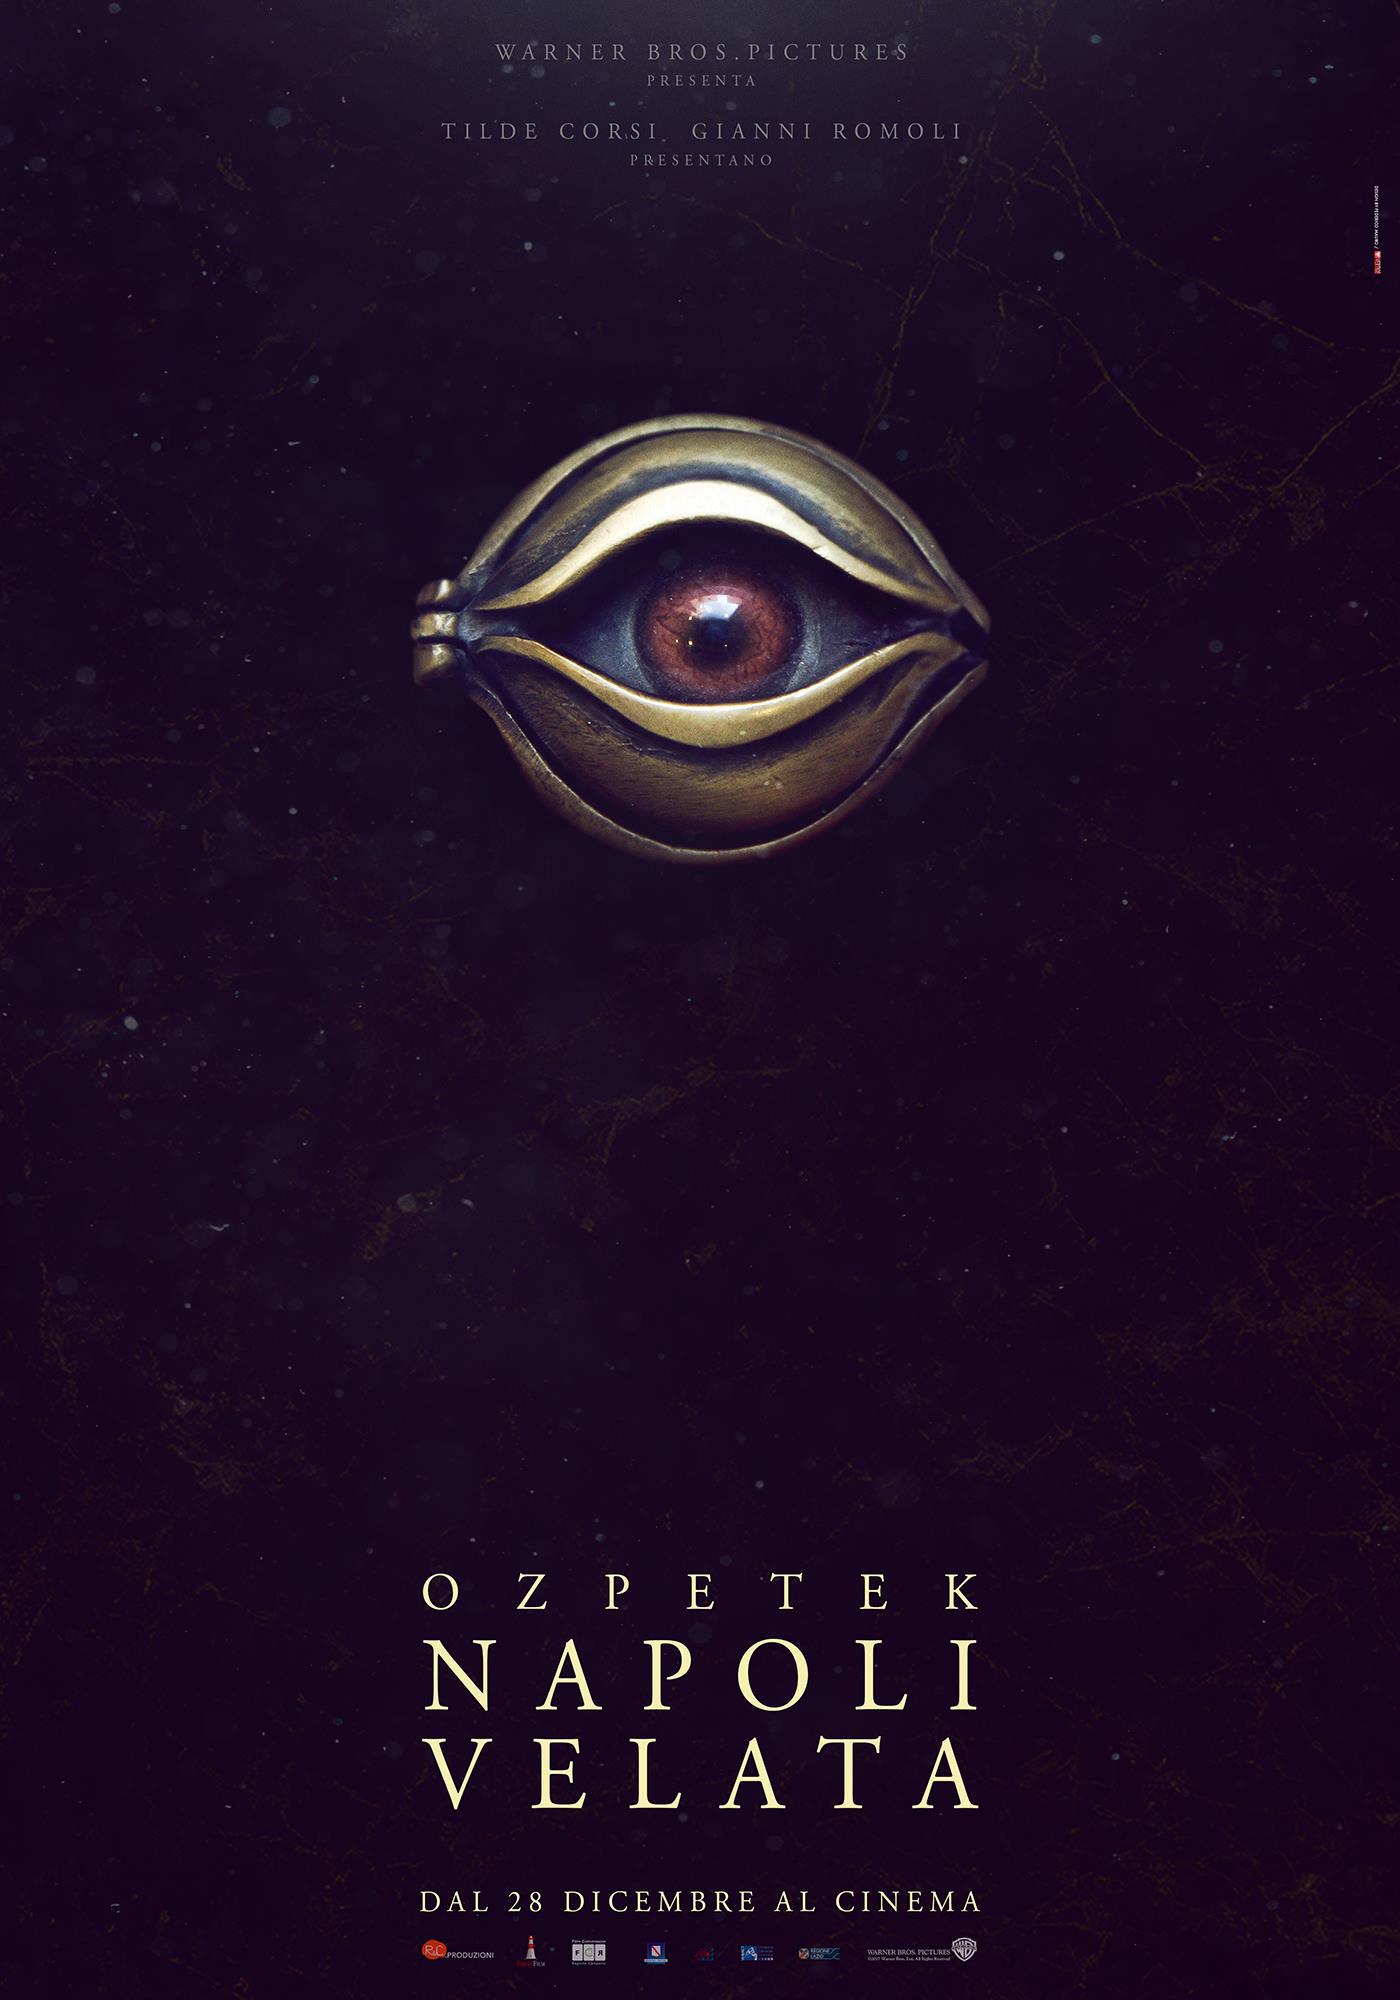 Mega Sized Movie Poster Image for Napoli velata (#1 of 4)